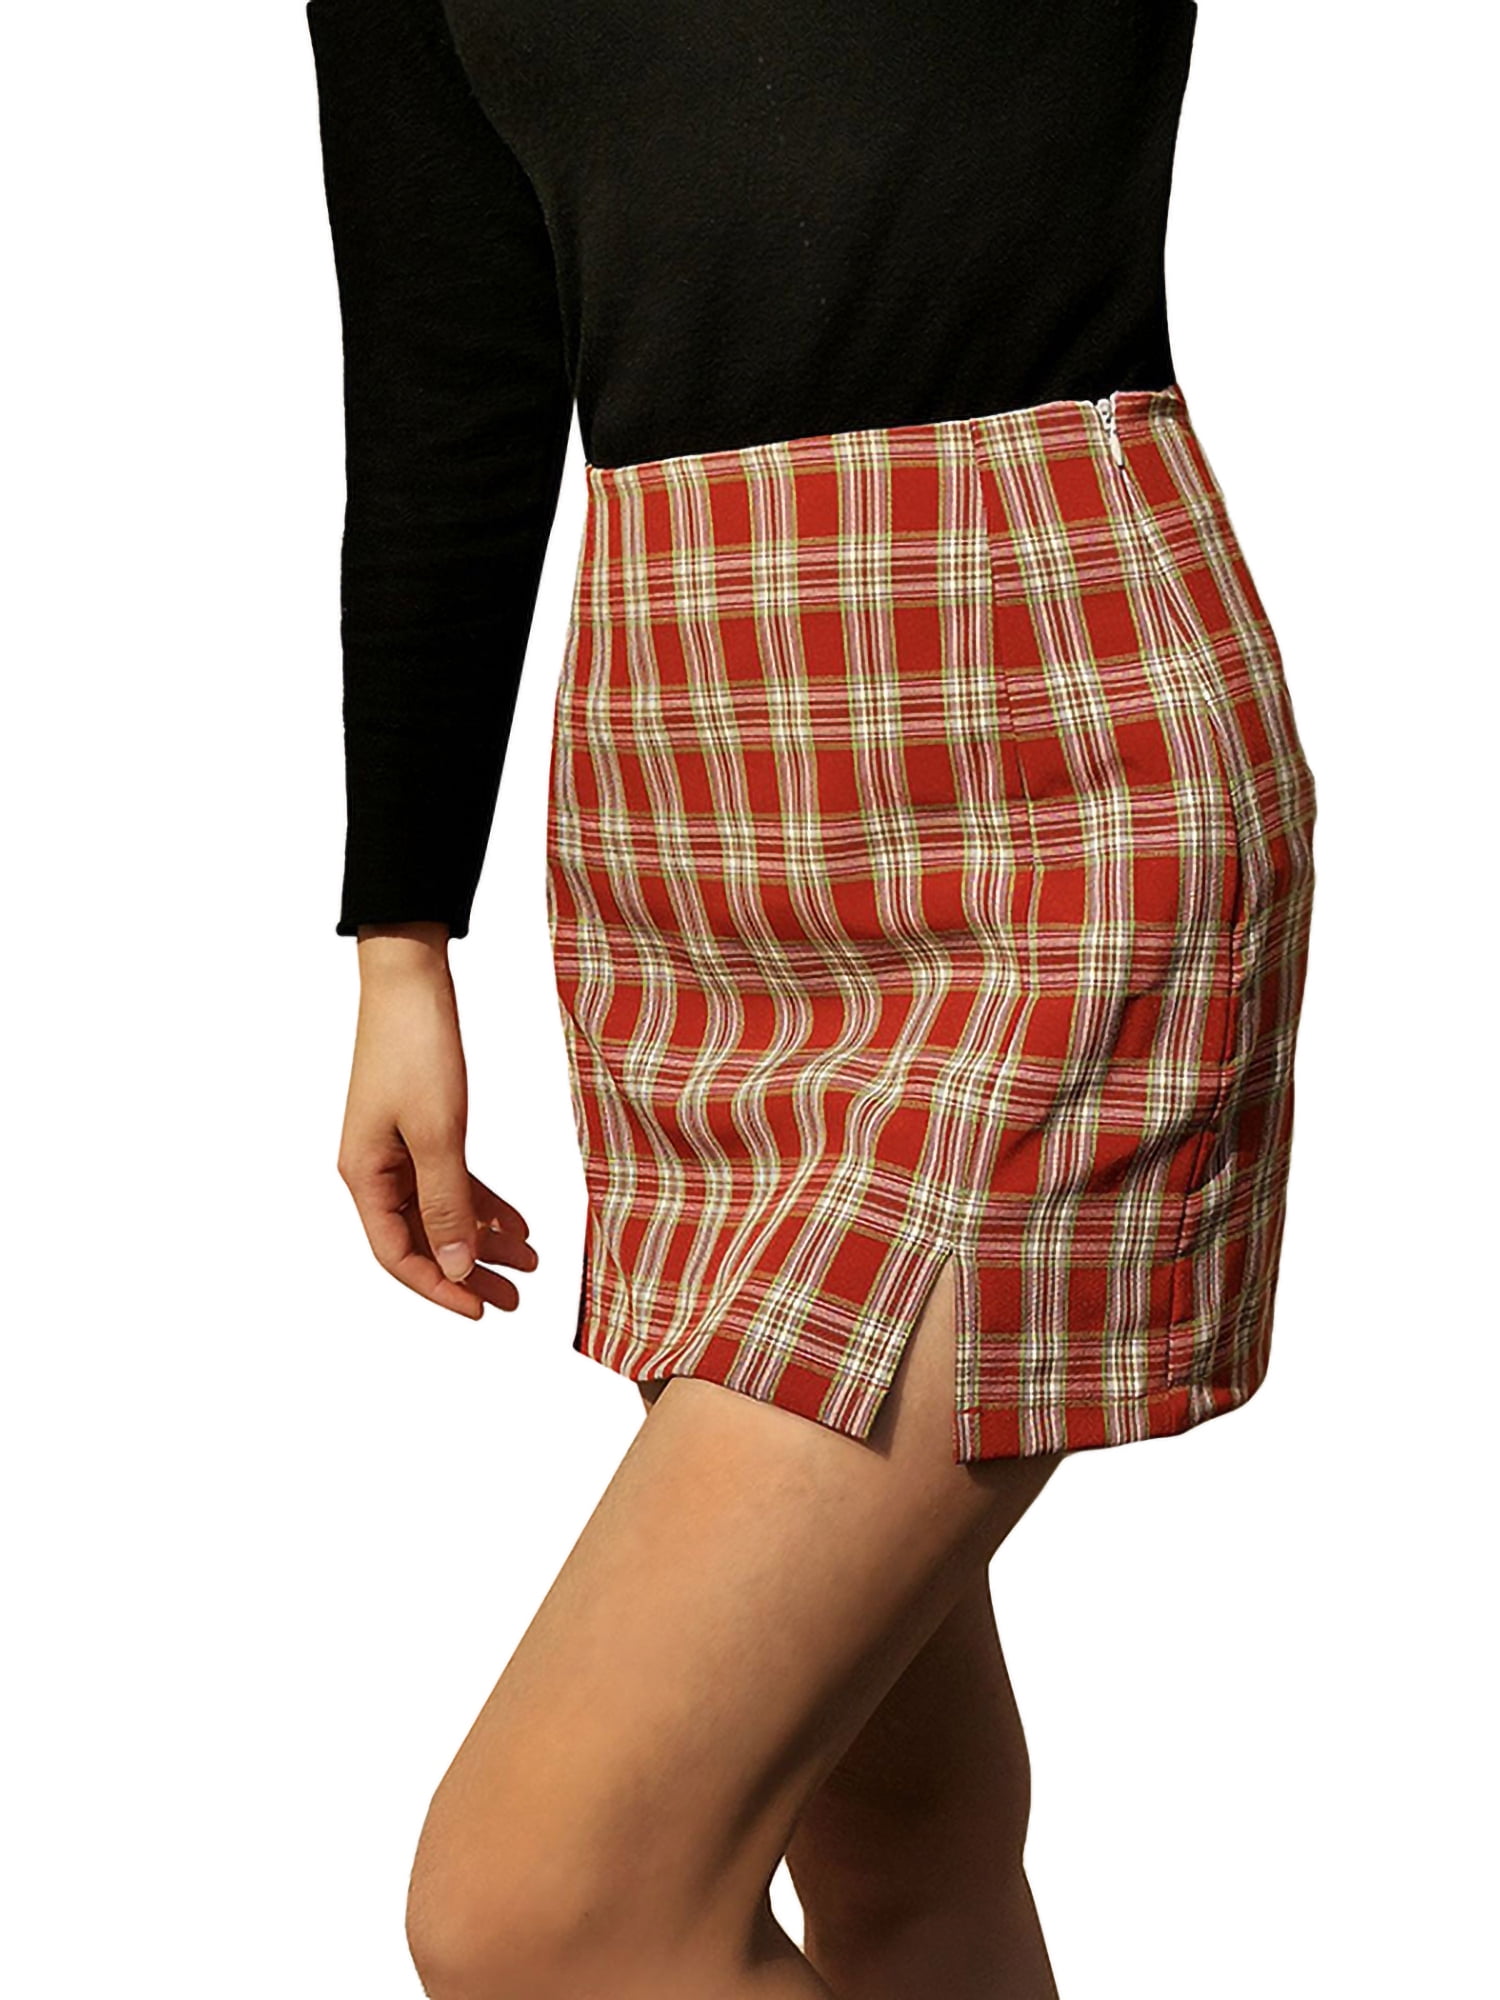 pencil skirt dress vintage